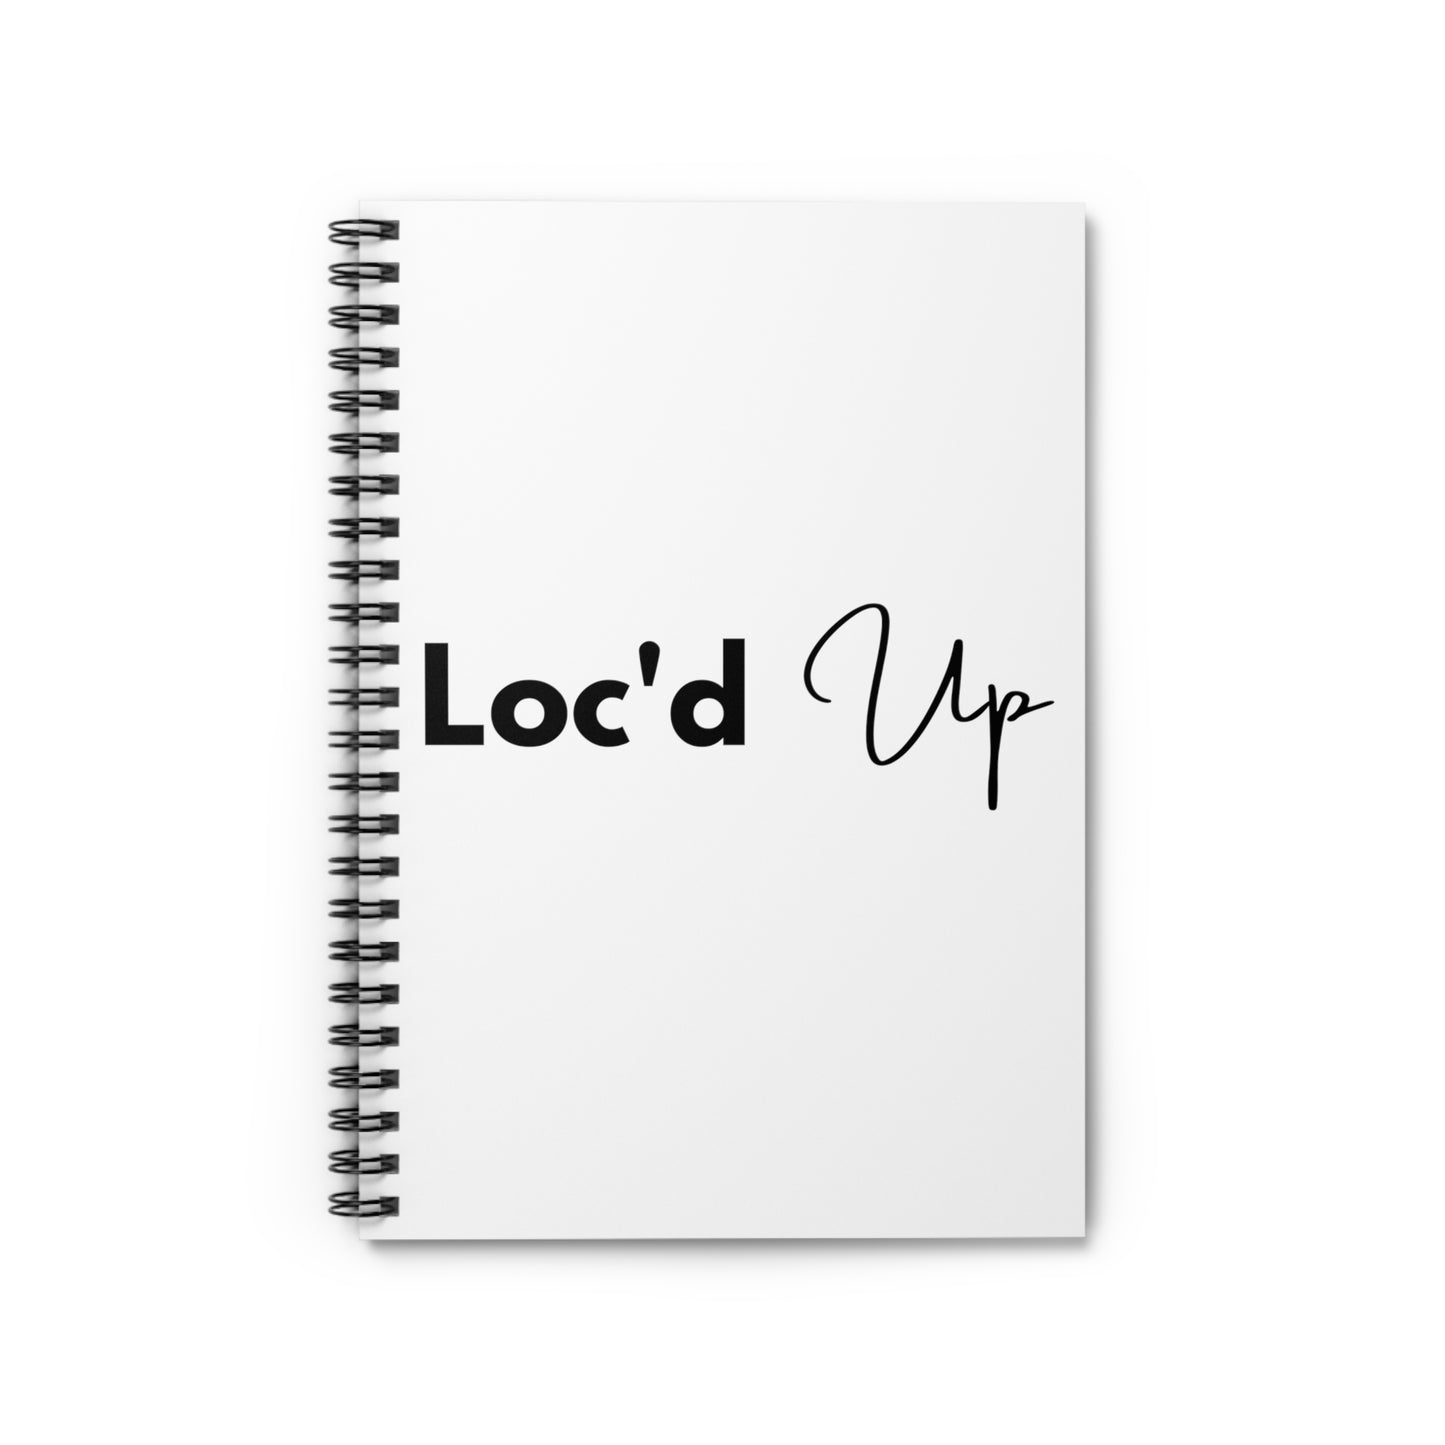 Loc'd Up Spiral Notebook - Ruled Line